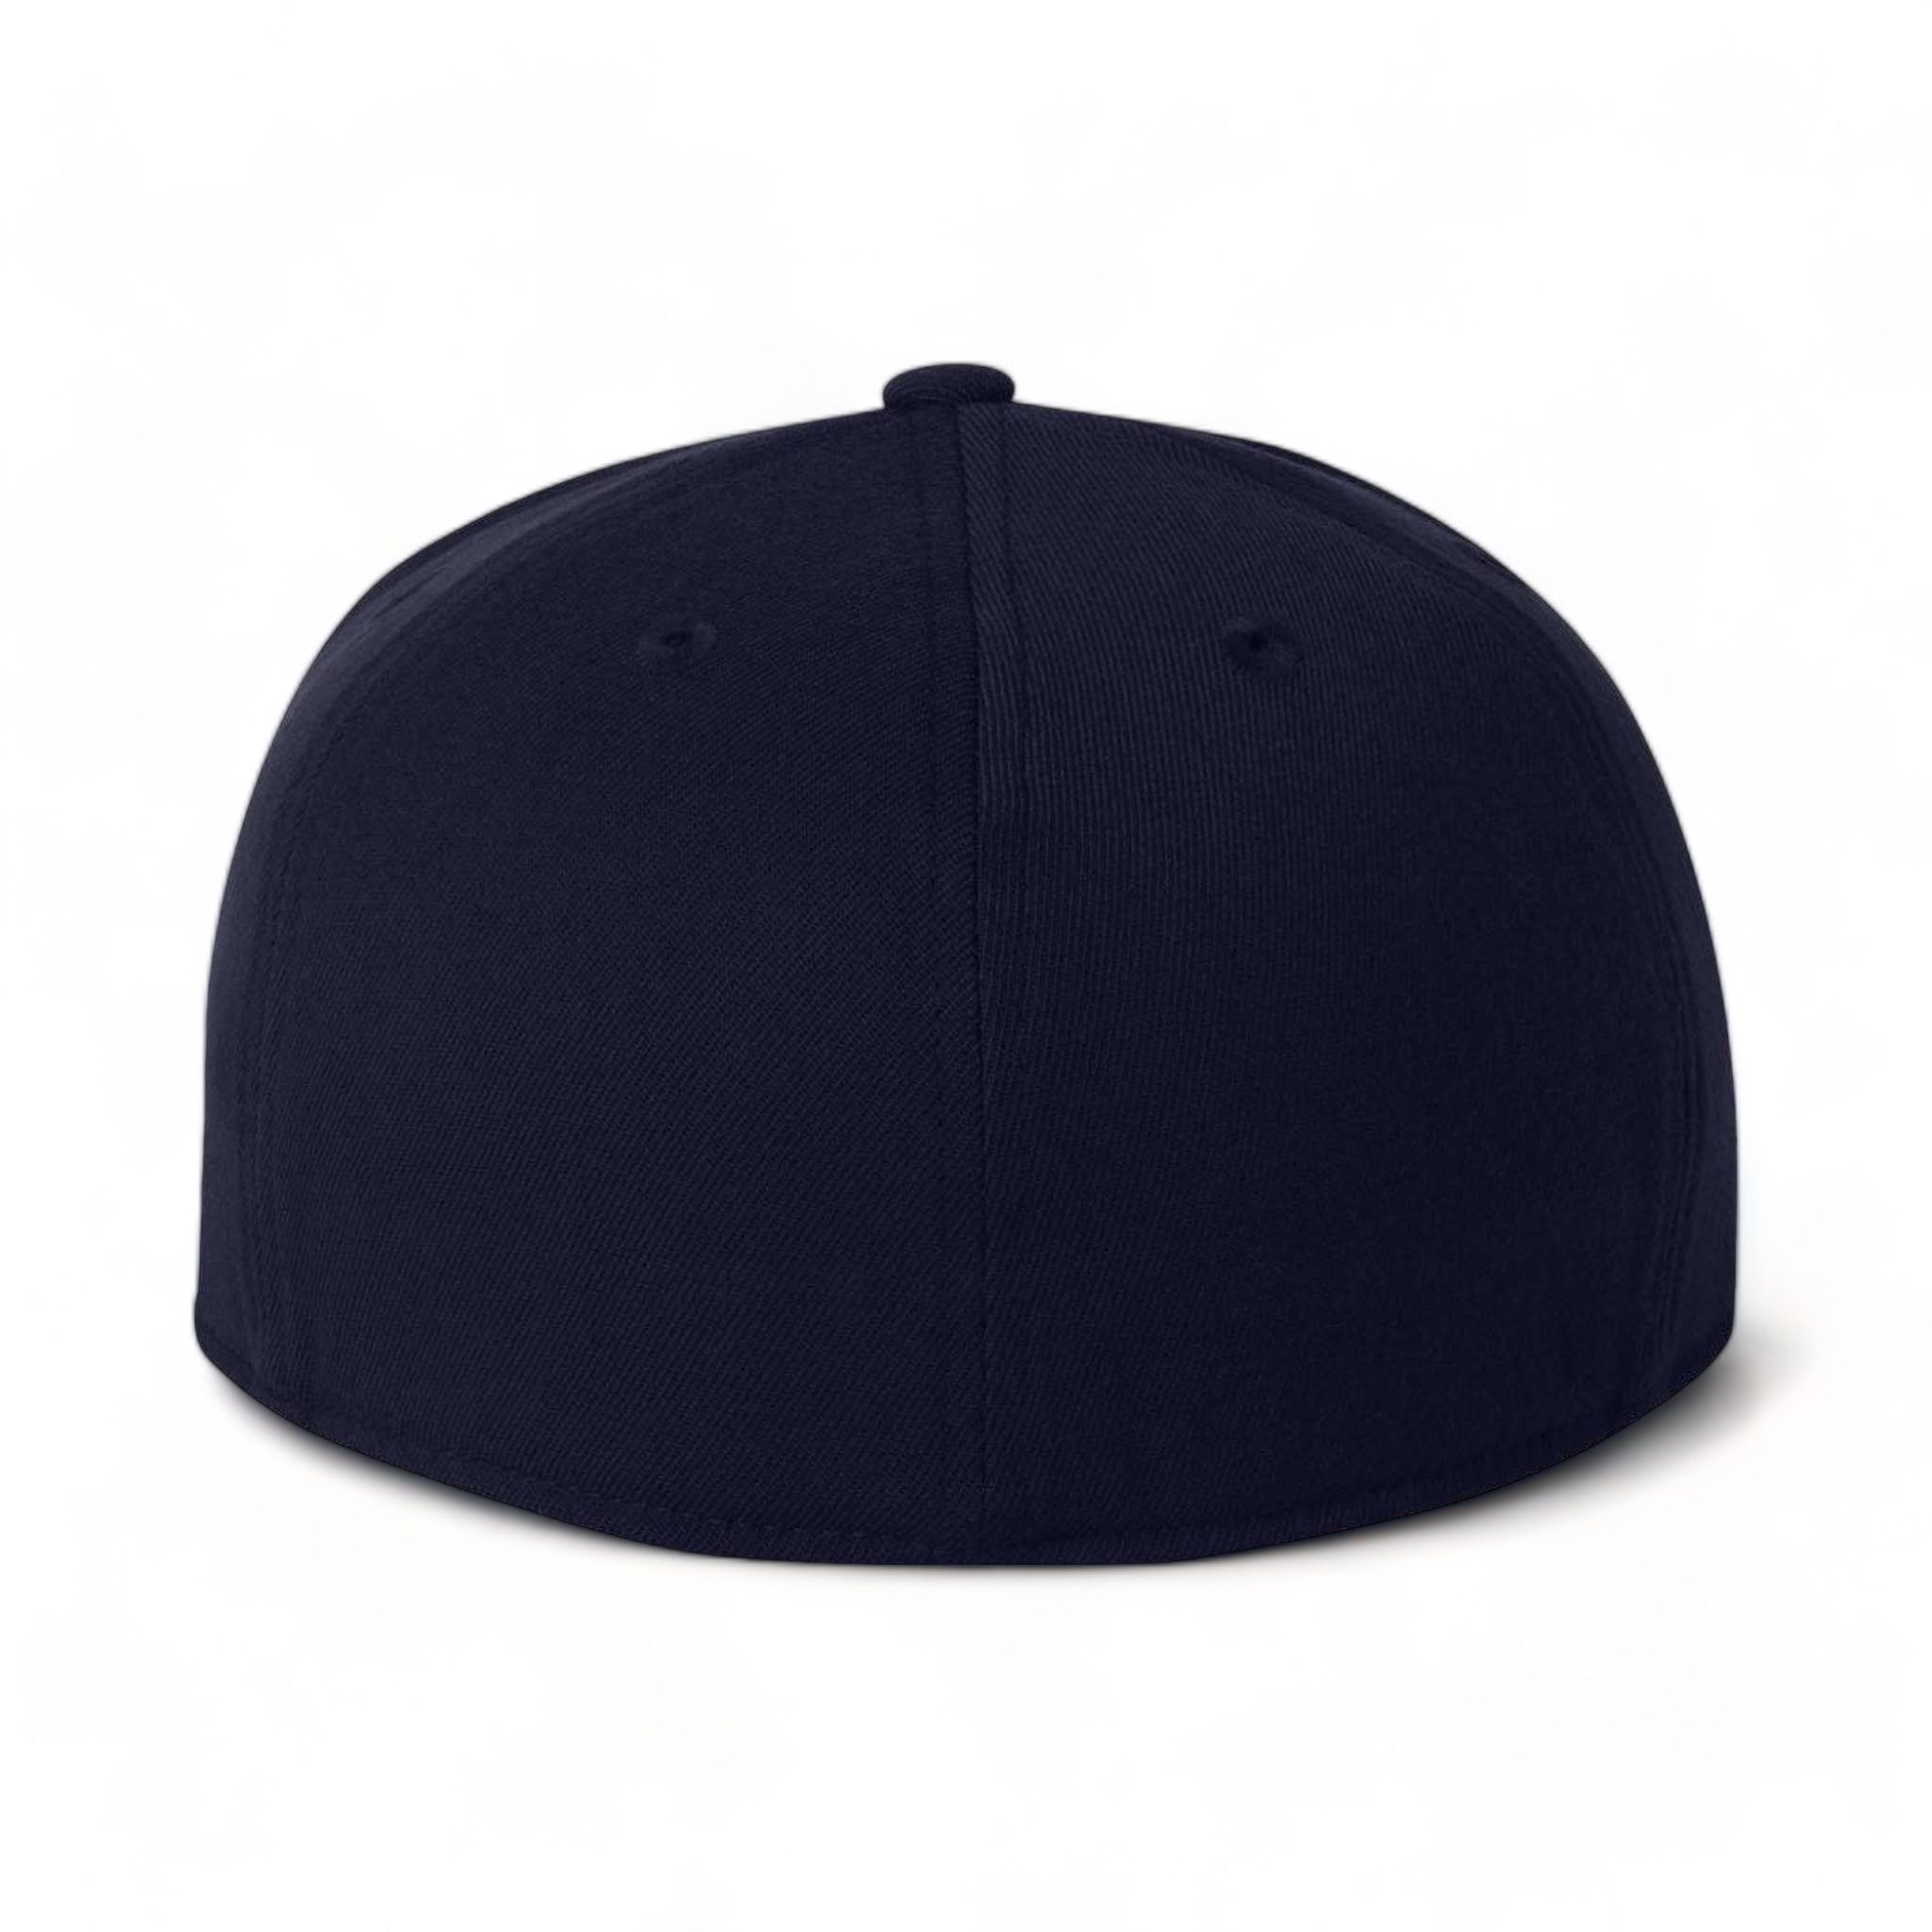 Back view of Flexfit 6210FF custom hat in dark navy